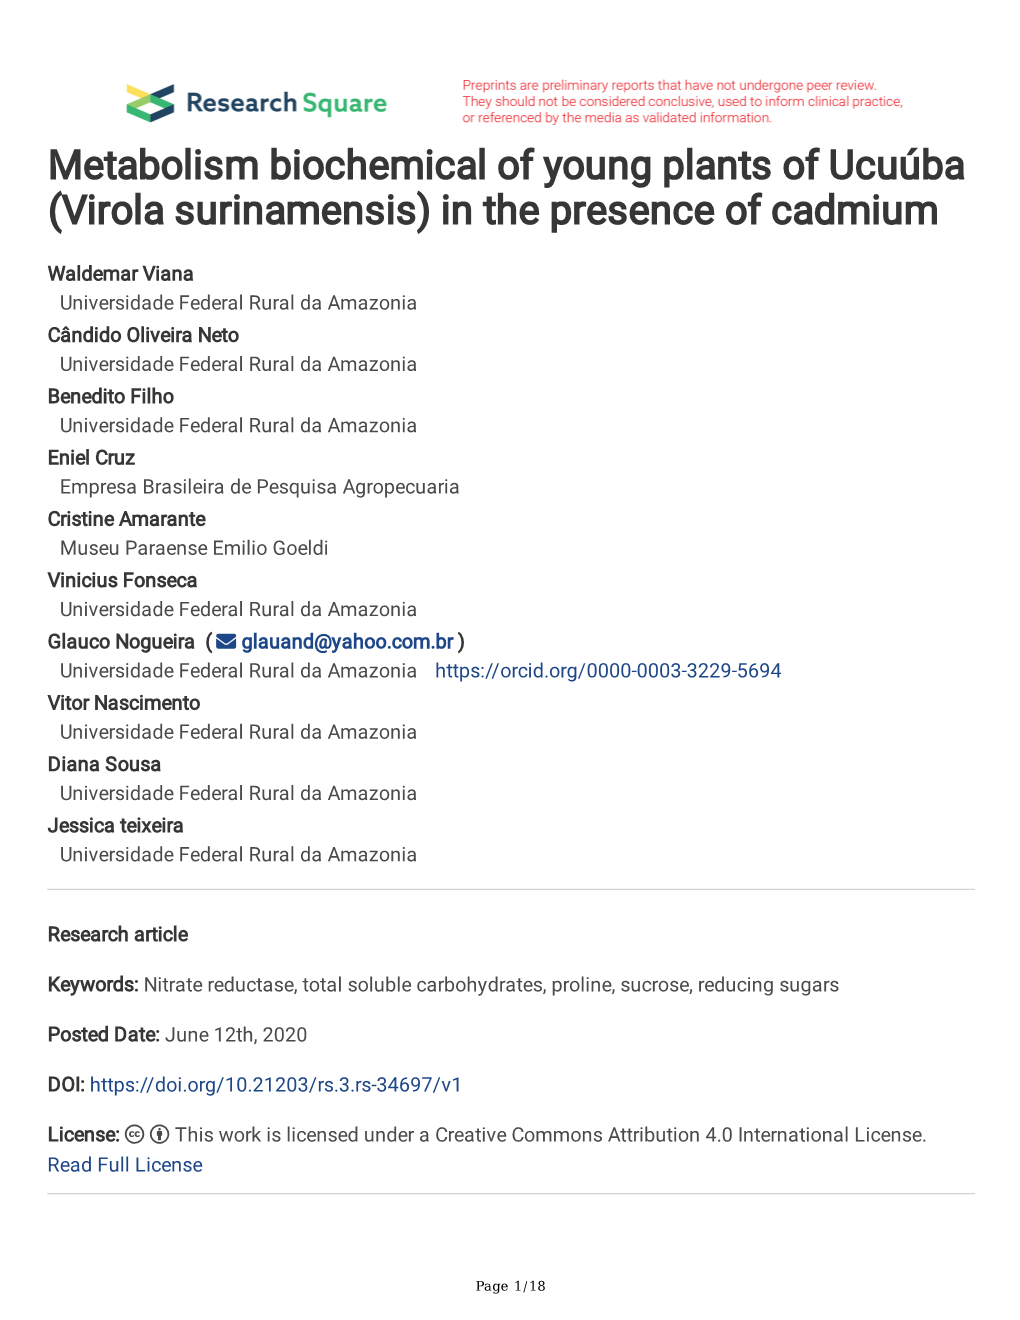 Virola Surinamensis) in the Presence of Cadmium